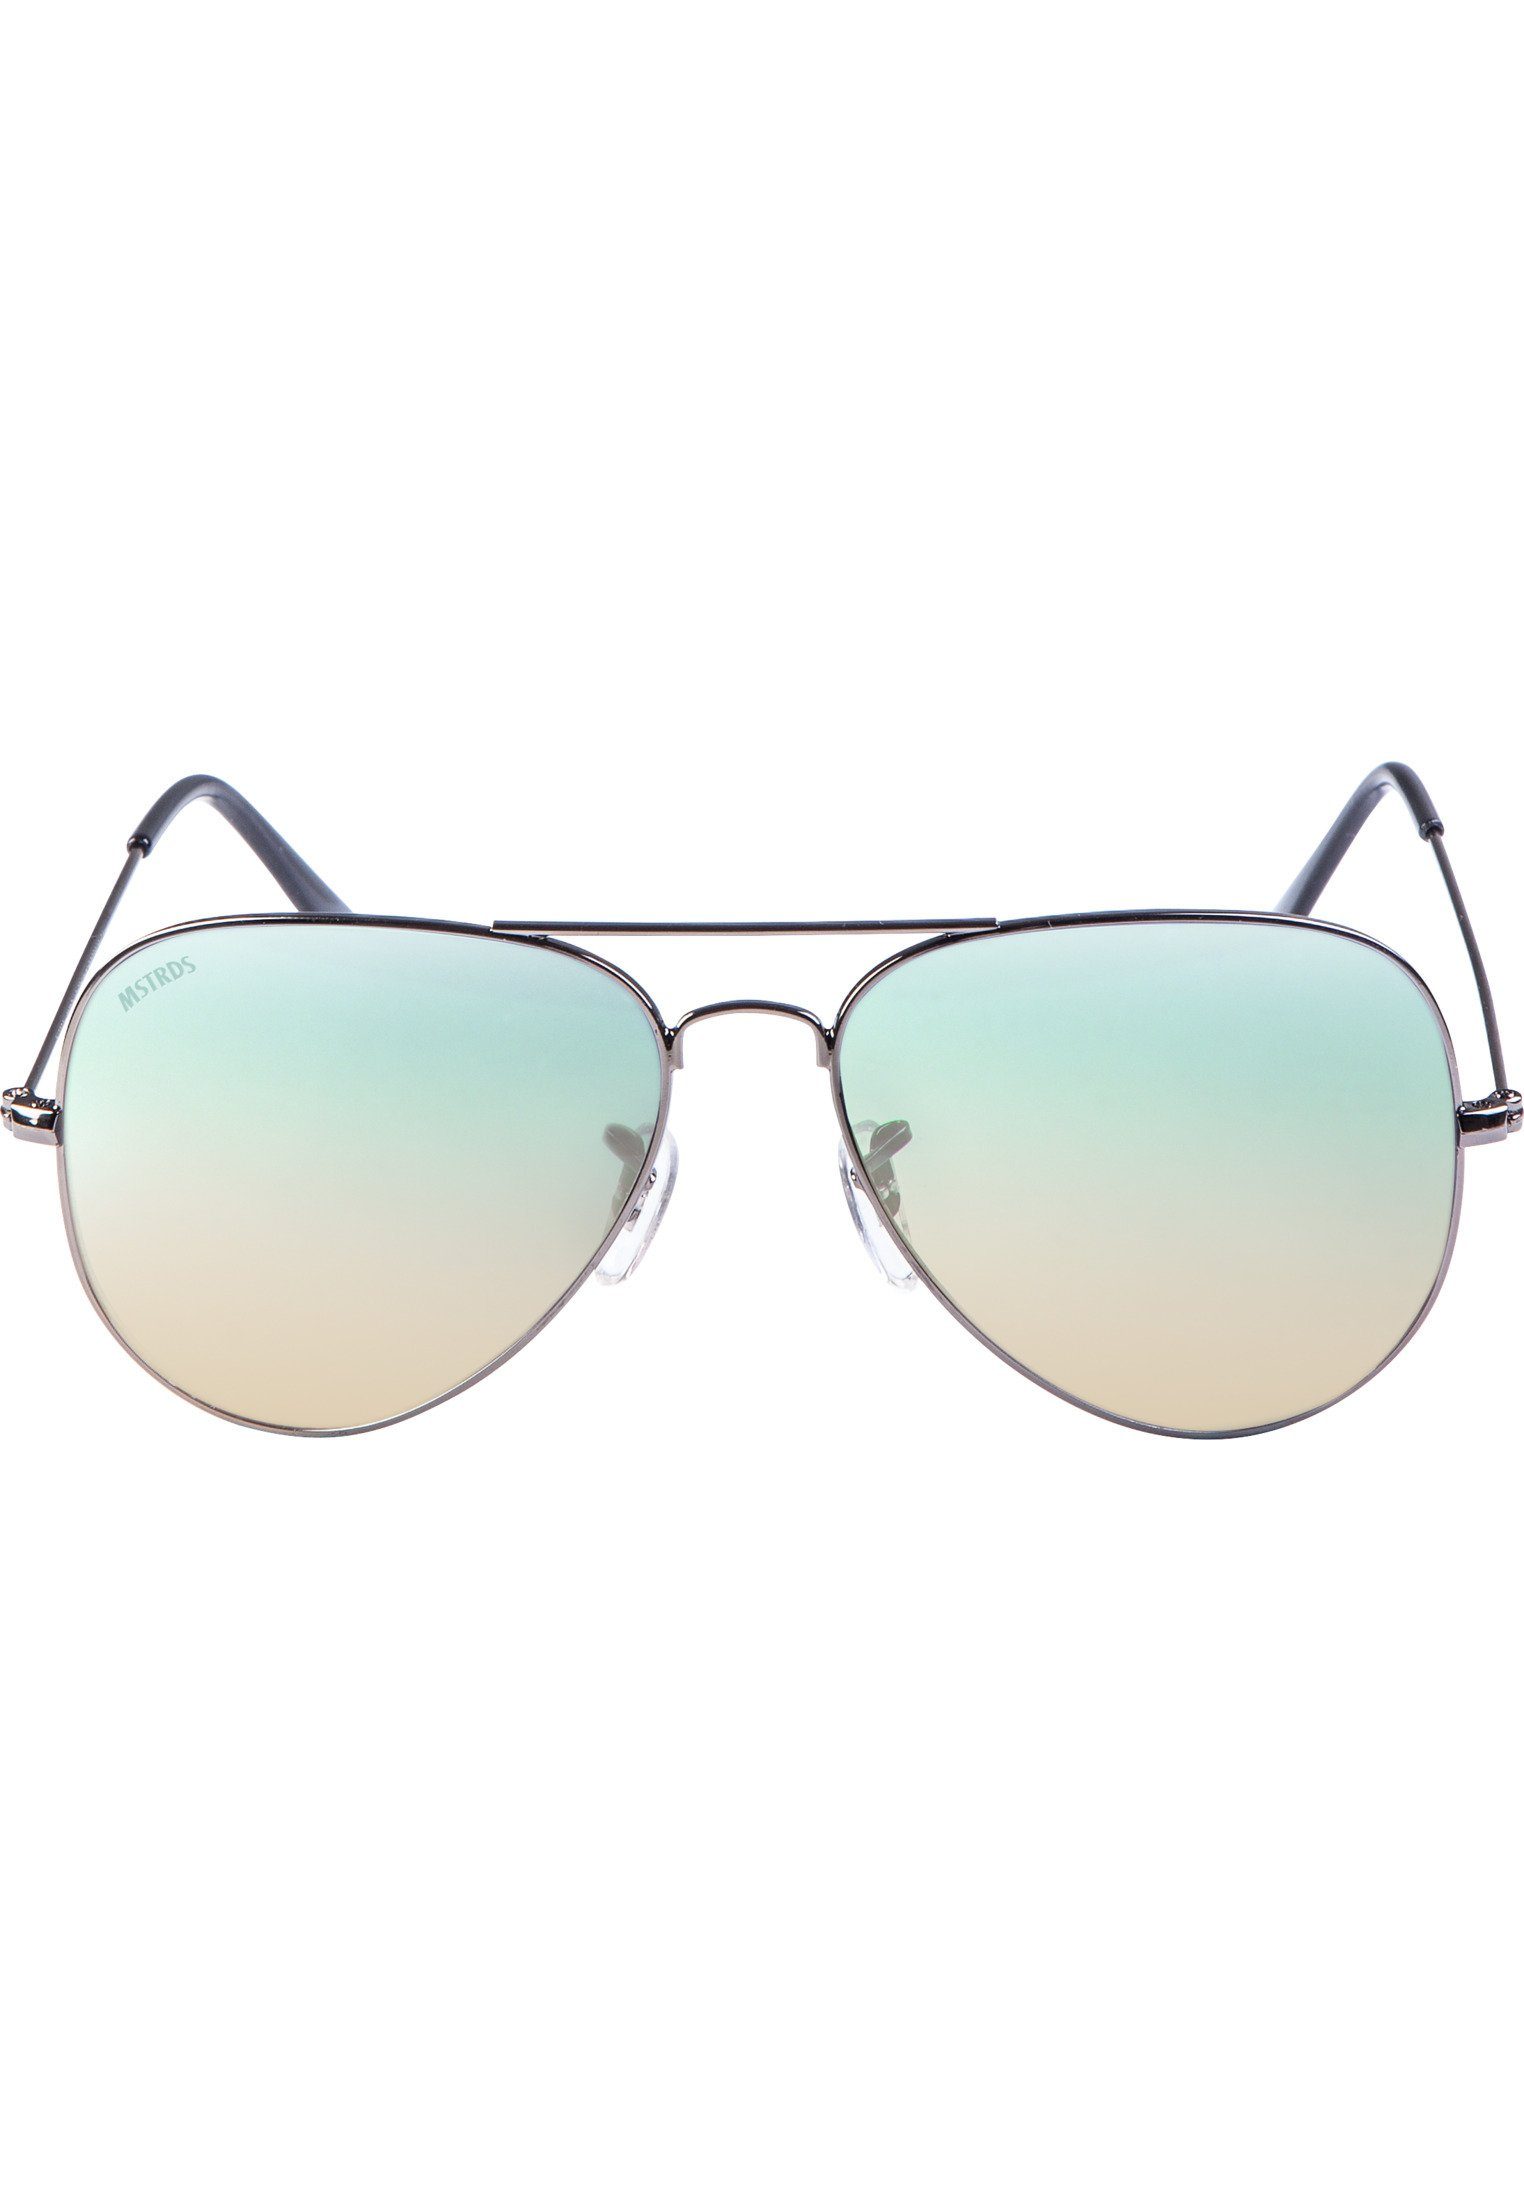 Neue Besonderheit! MSTRDS Sonnenbrille Accessoires Sunglasses PureAv gun/blue